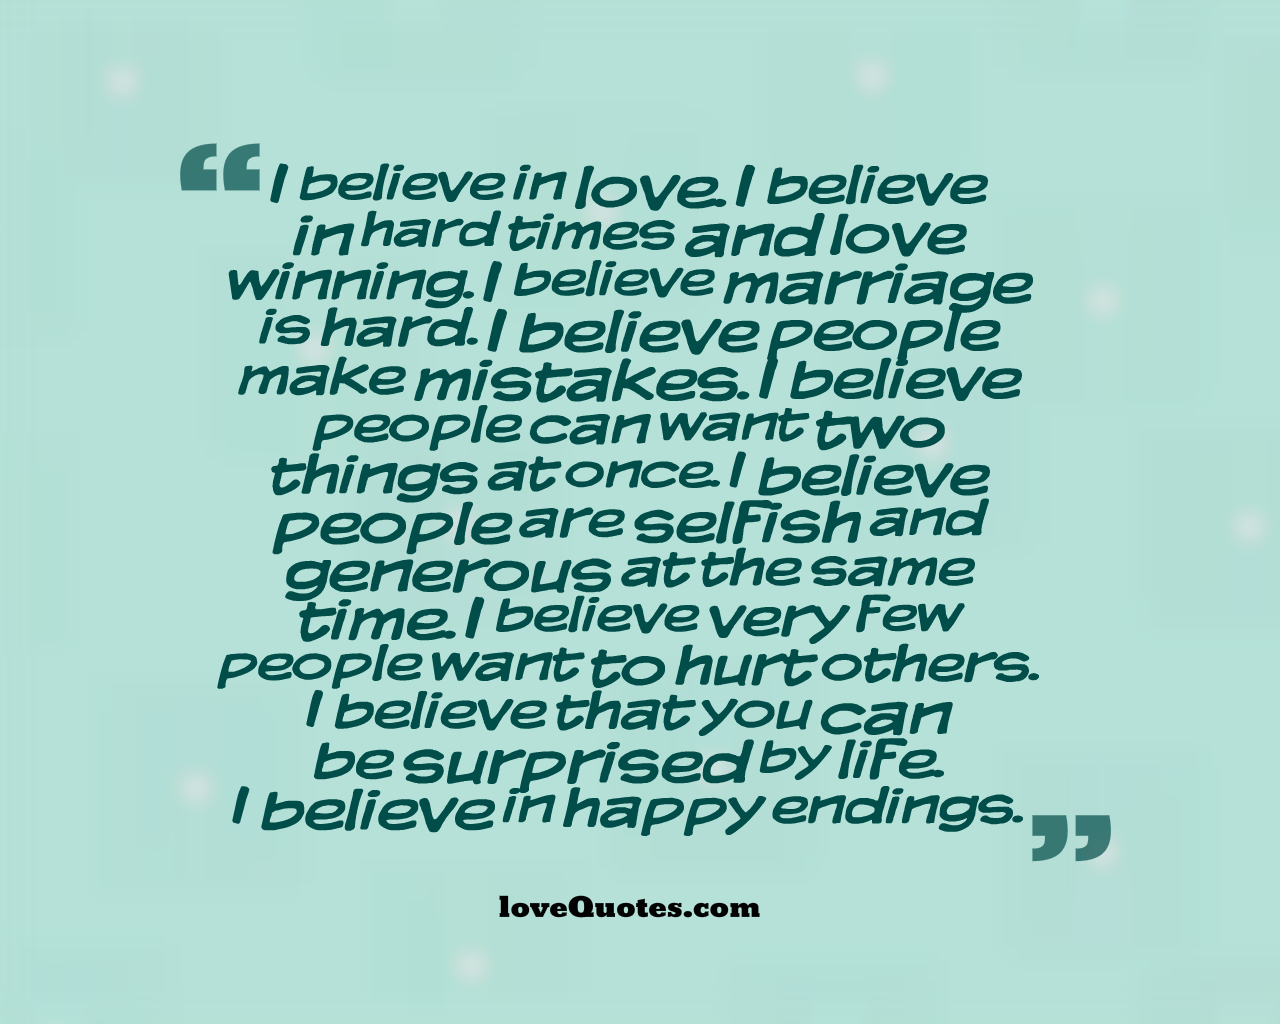 I Believe In Love